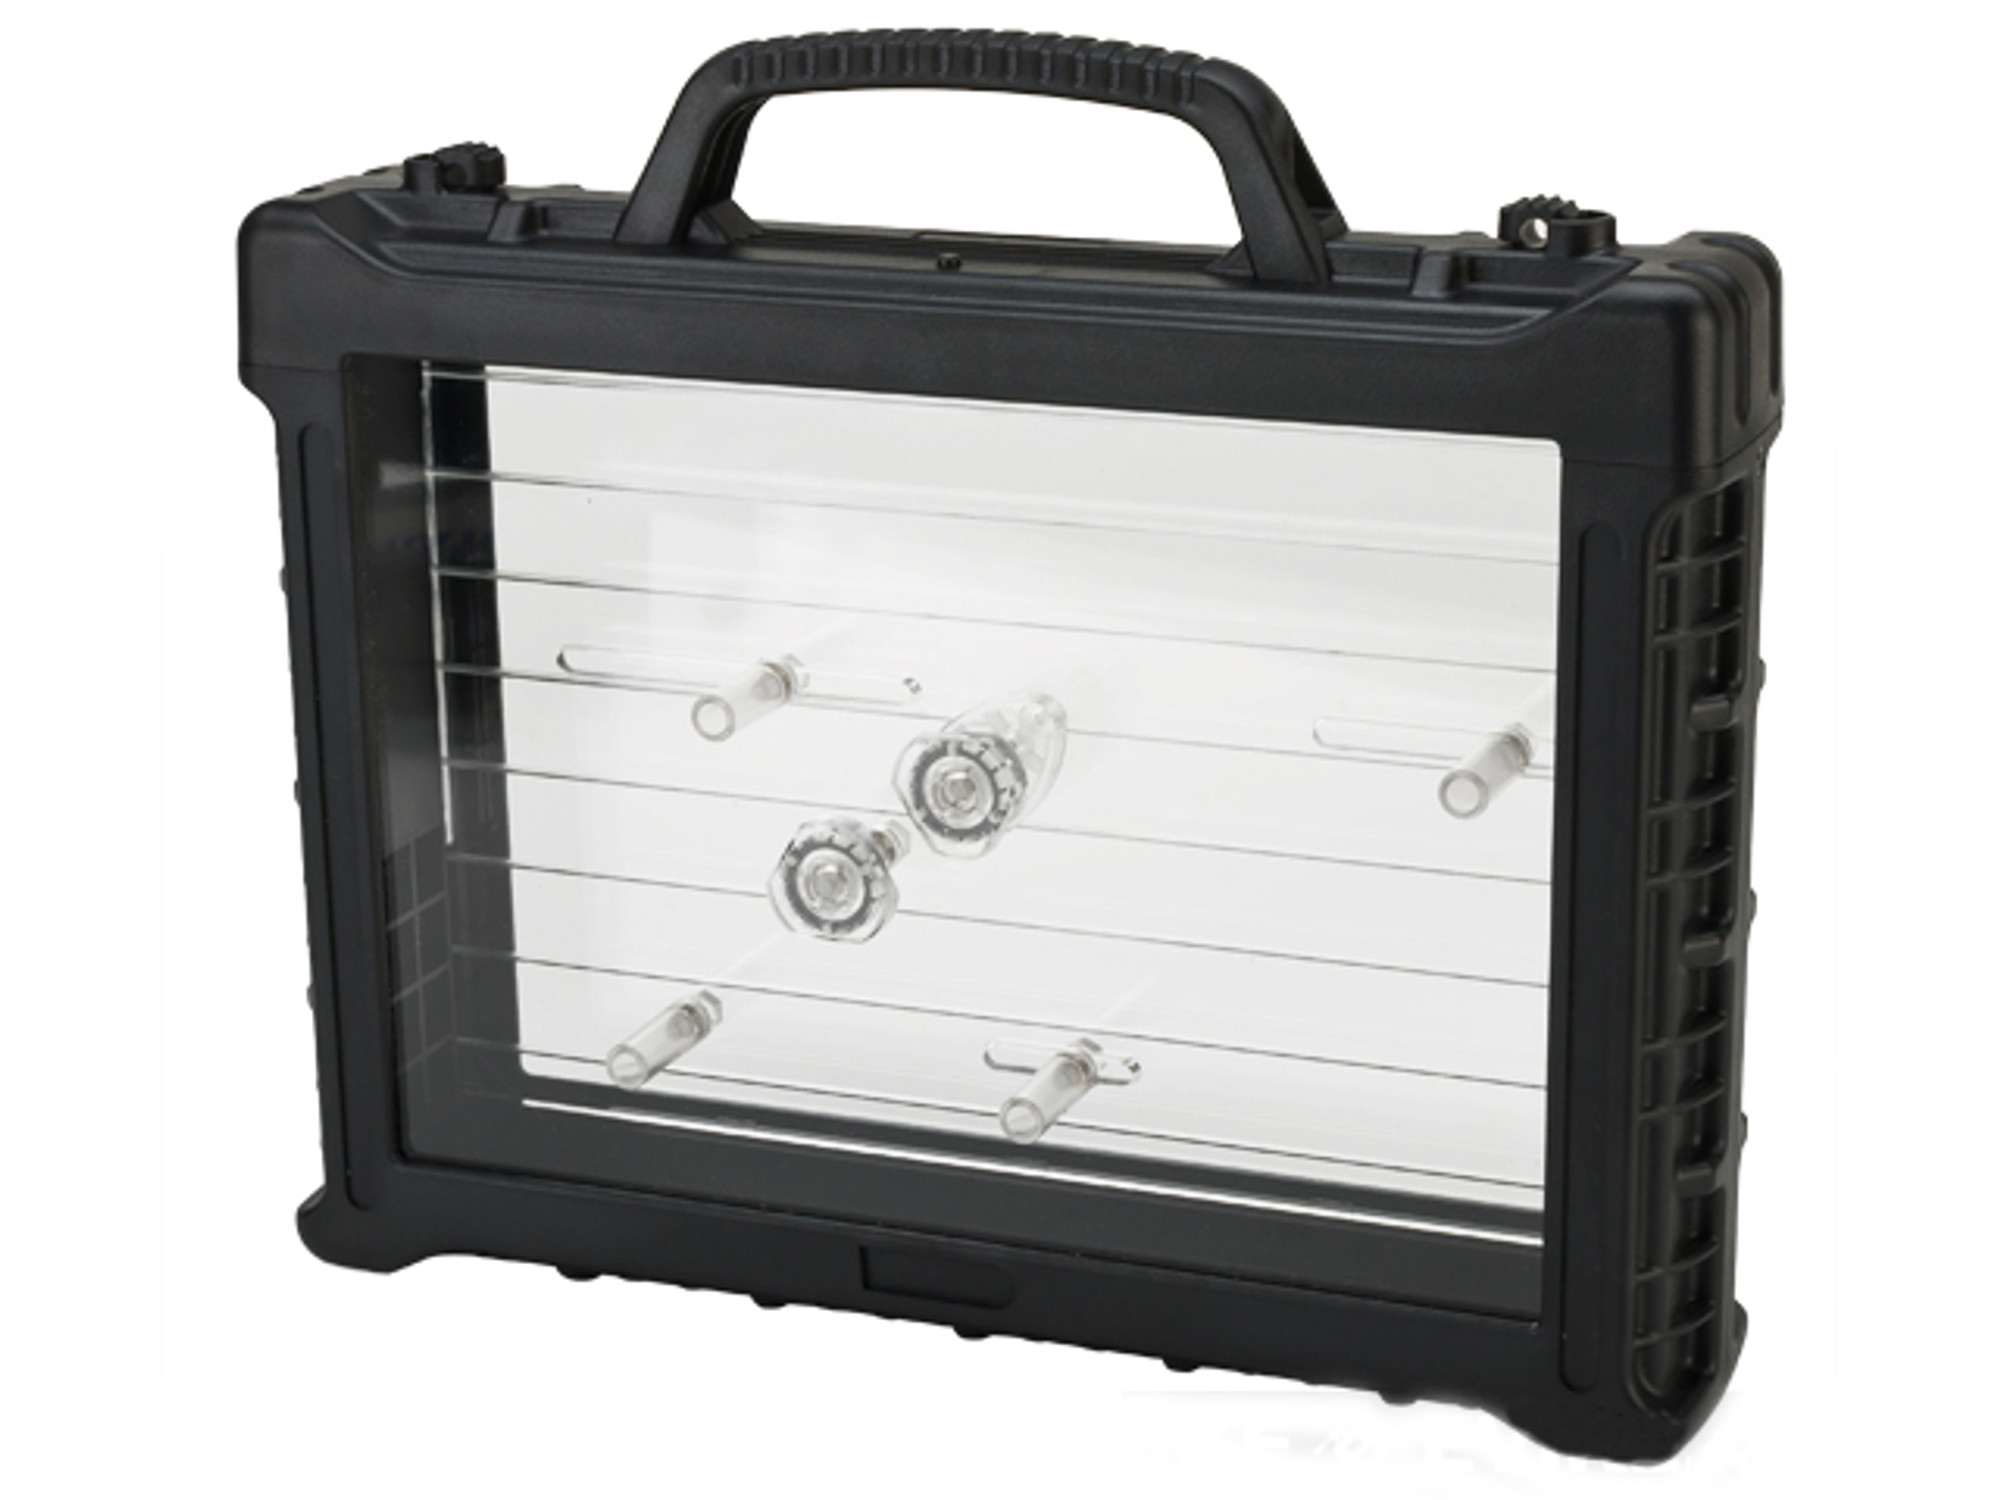 WE-Tech Ultimate Pistol Case with Internal LED Illumination